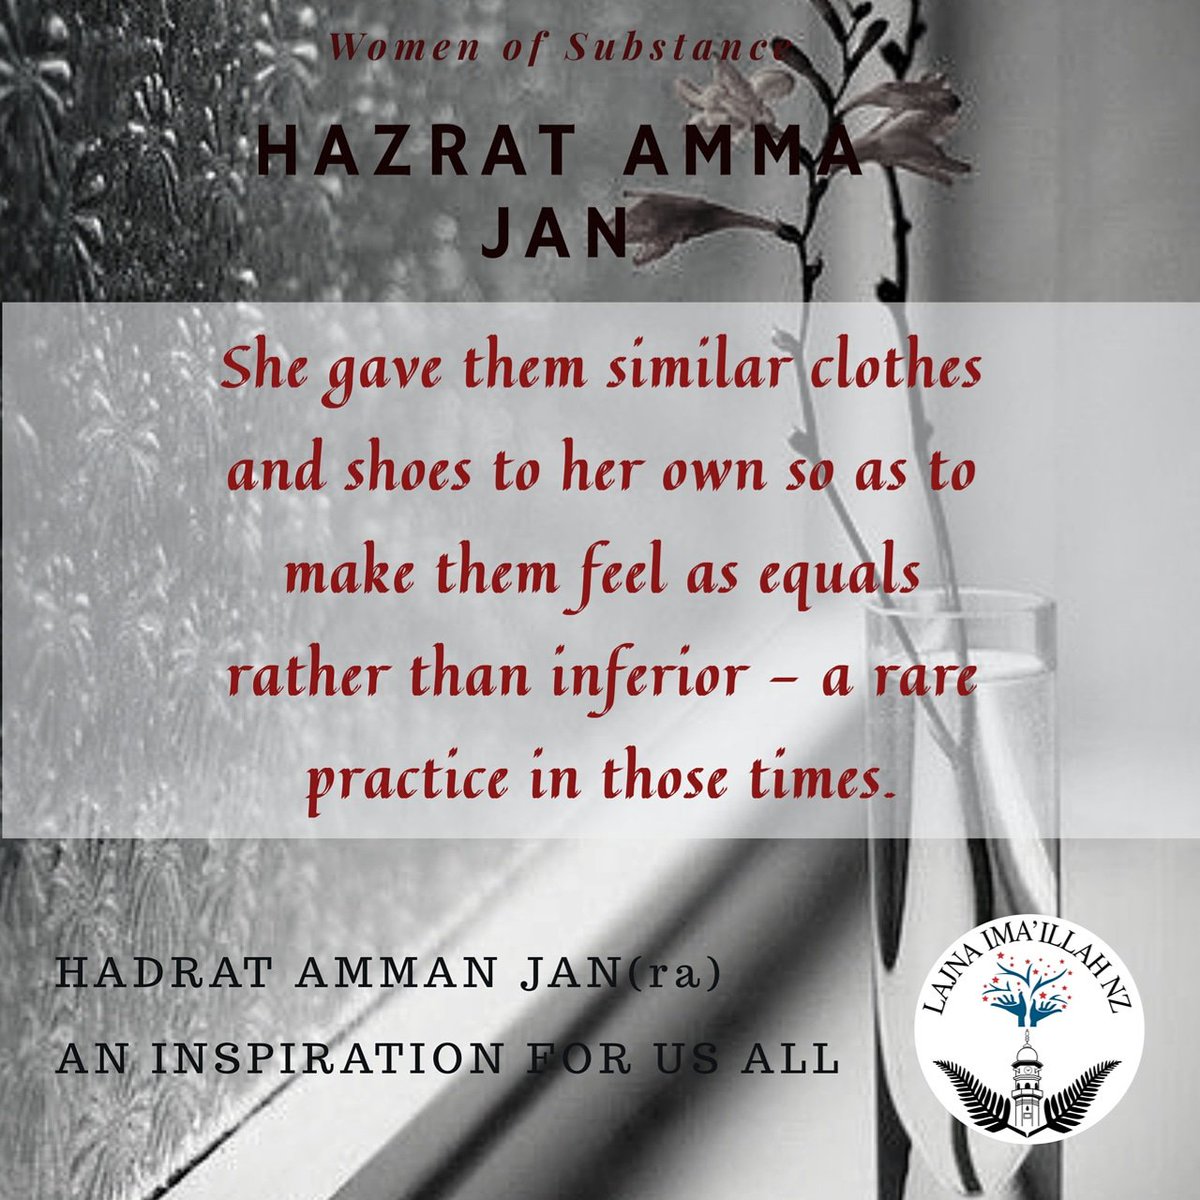 Hazrat Amma Jan; a woman of substance. 

#femalerolemodel #lajna